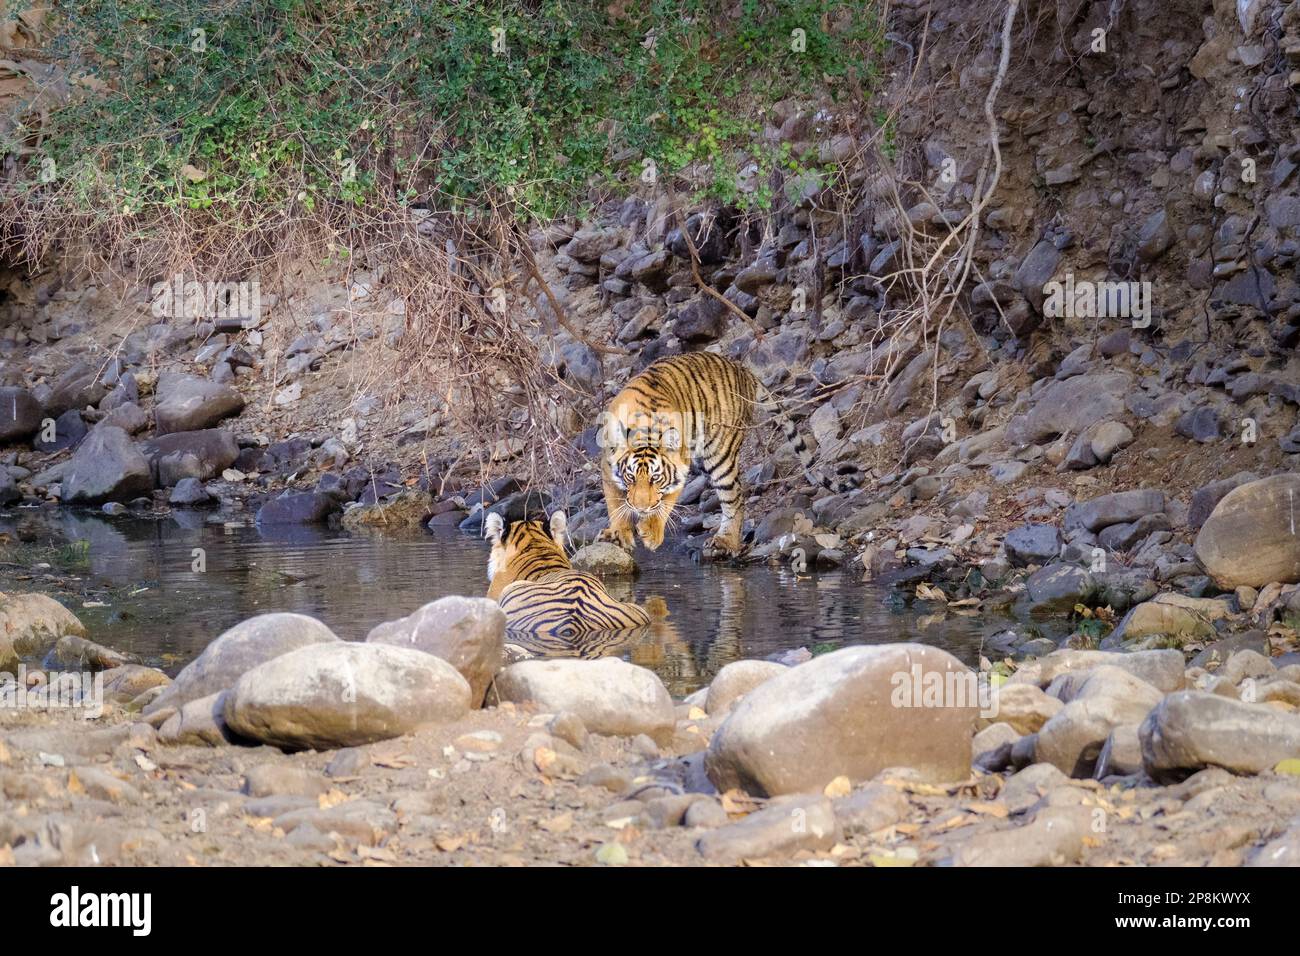 2 Tiger cubs, Panthera tigris, in water playing. 1 cub prepares to jump on its sibling. Ranthambore National Park, Rajasthan, India Stock Photo